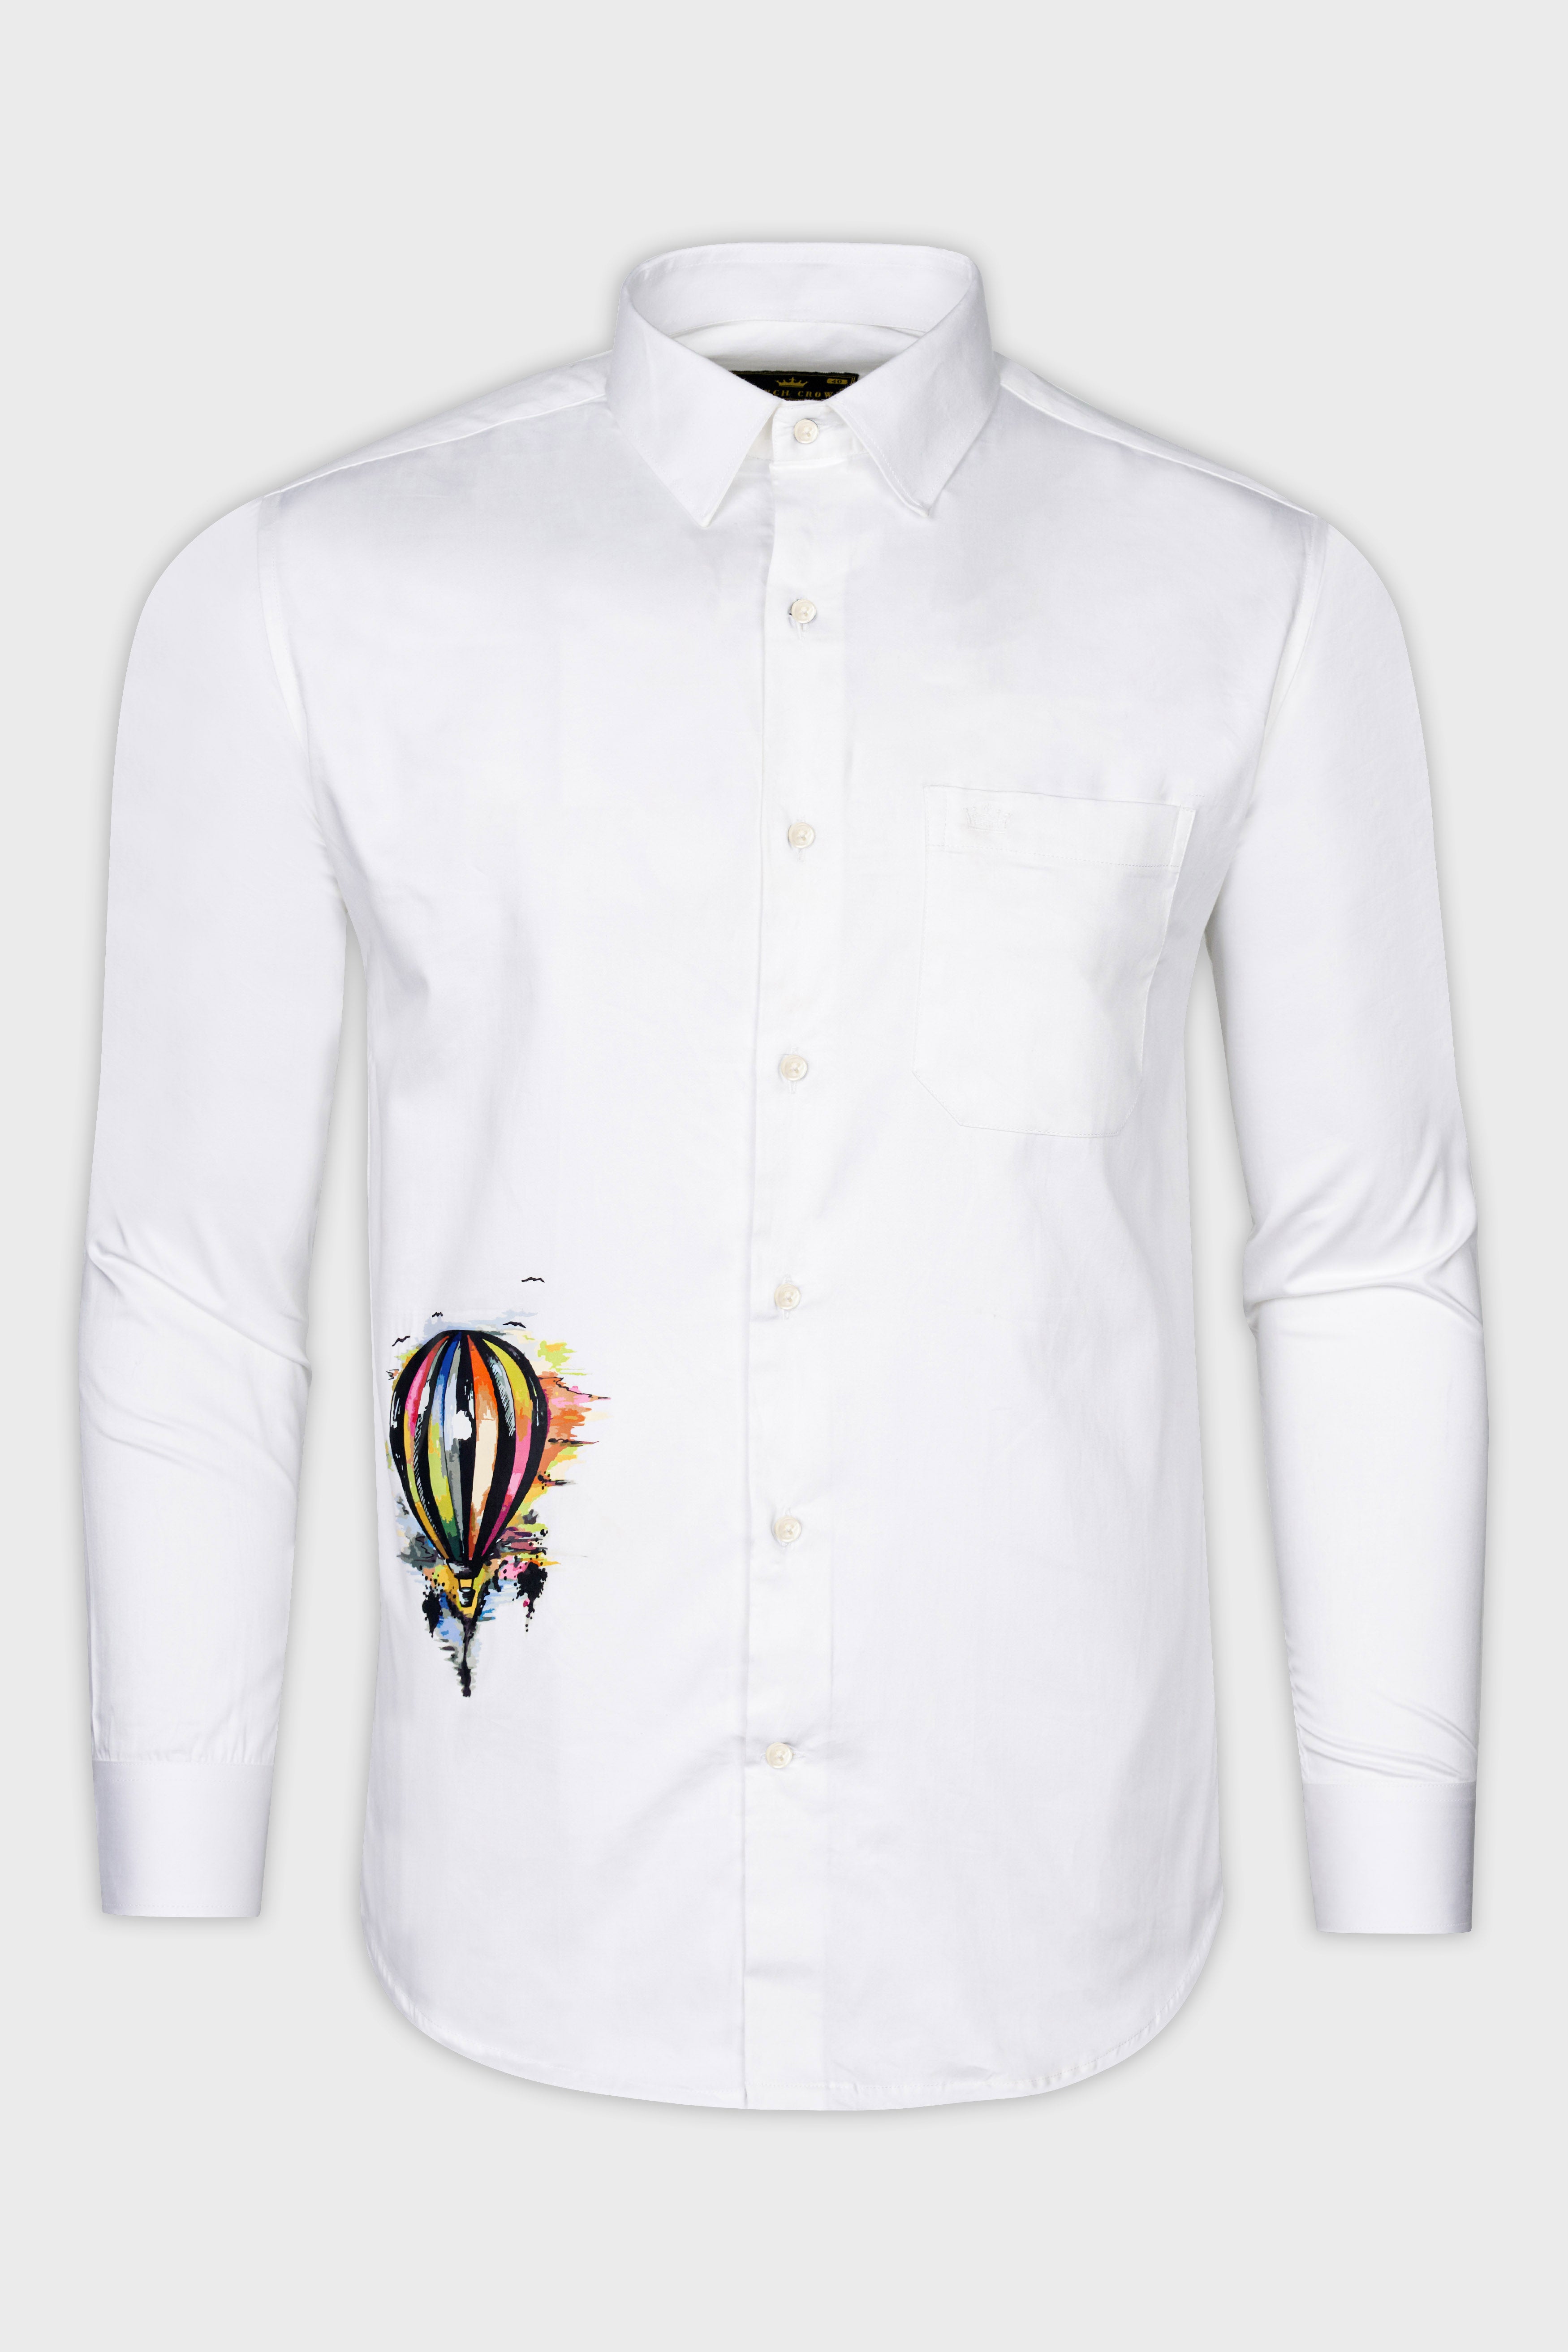 Bright White Funky Printed Premium Cotton Designer Shirt